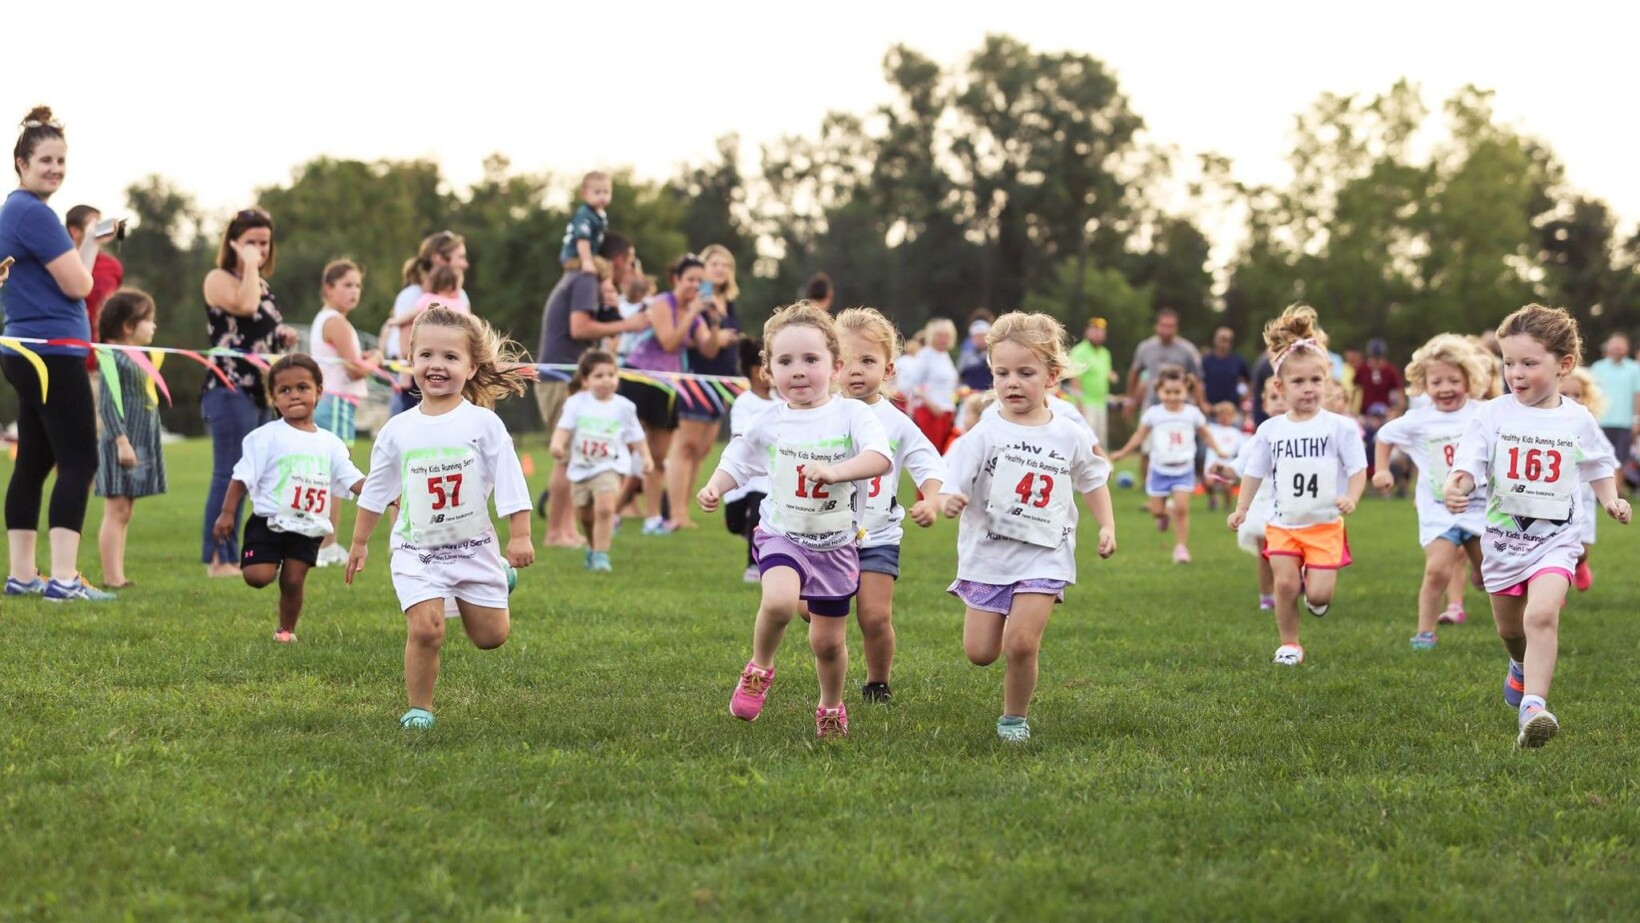 Tiny children running in a race on green grass.